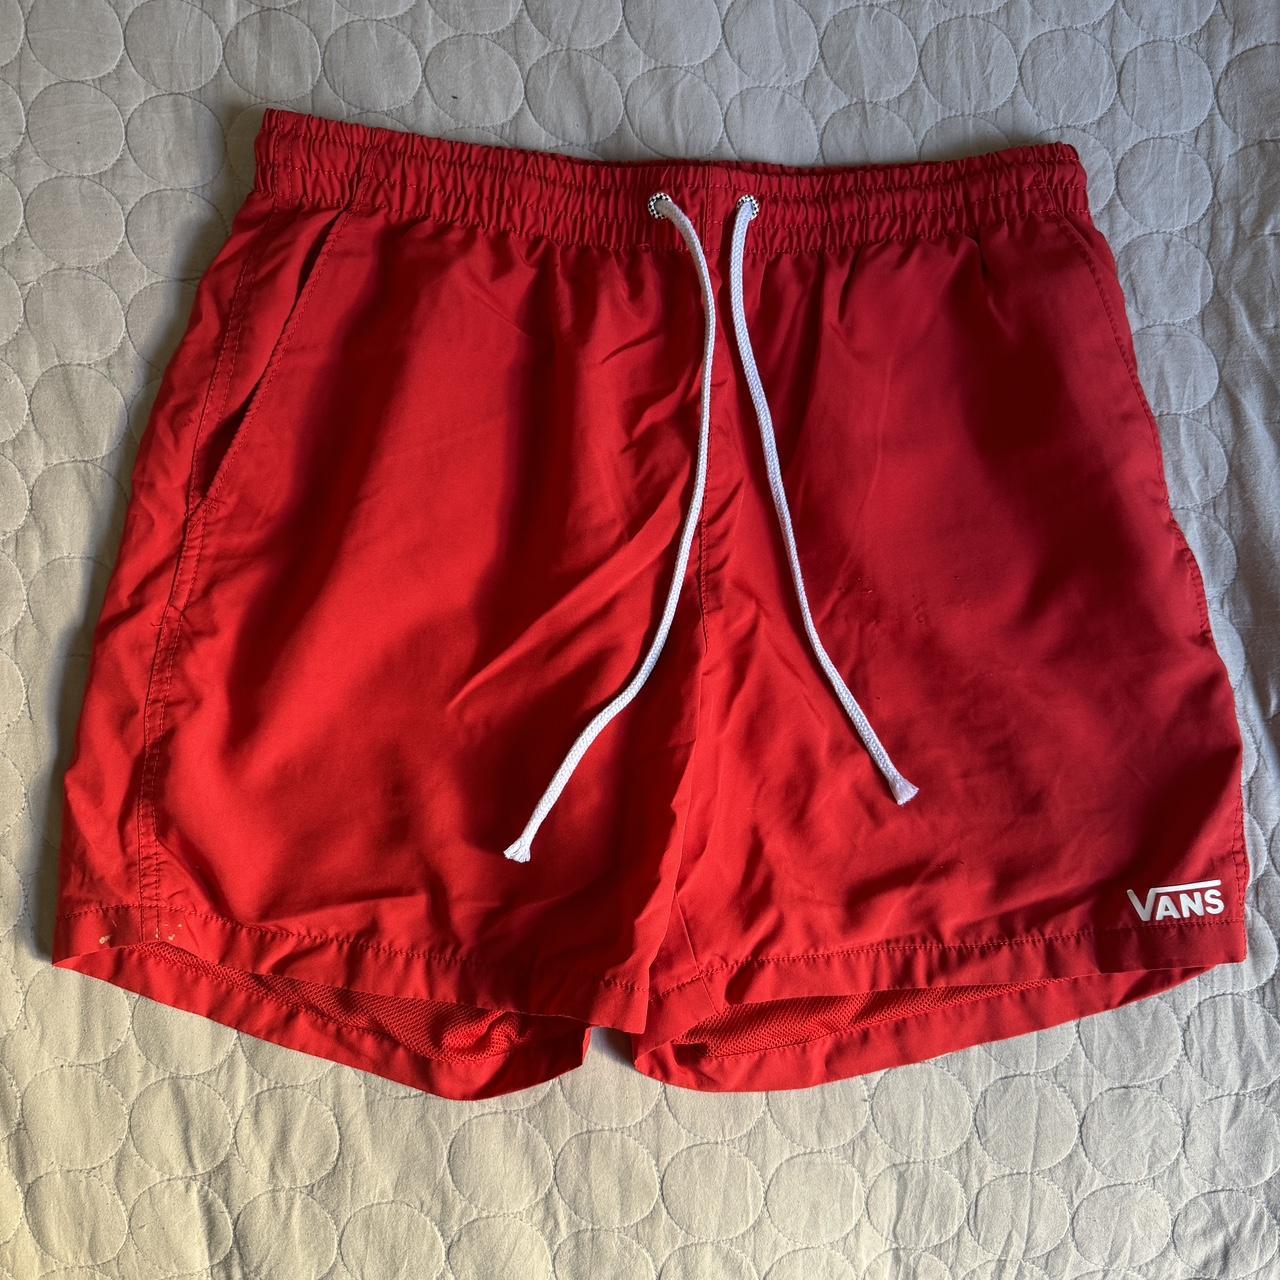 Red Men’s Nylon Shorts * has minor distressing and... - Depop